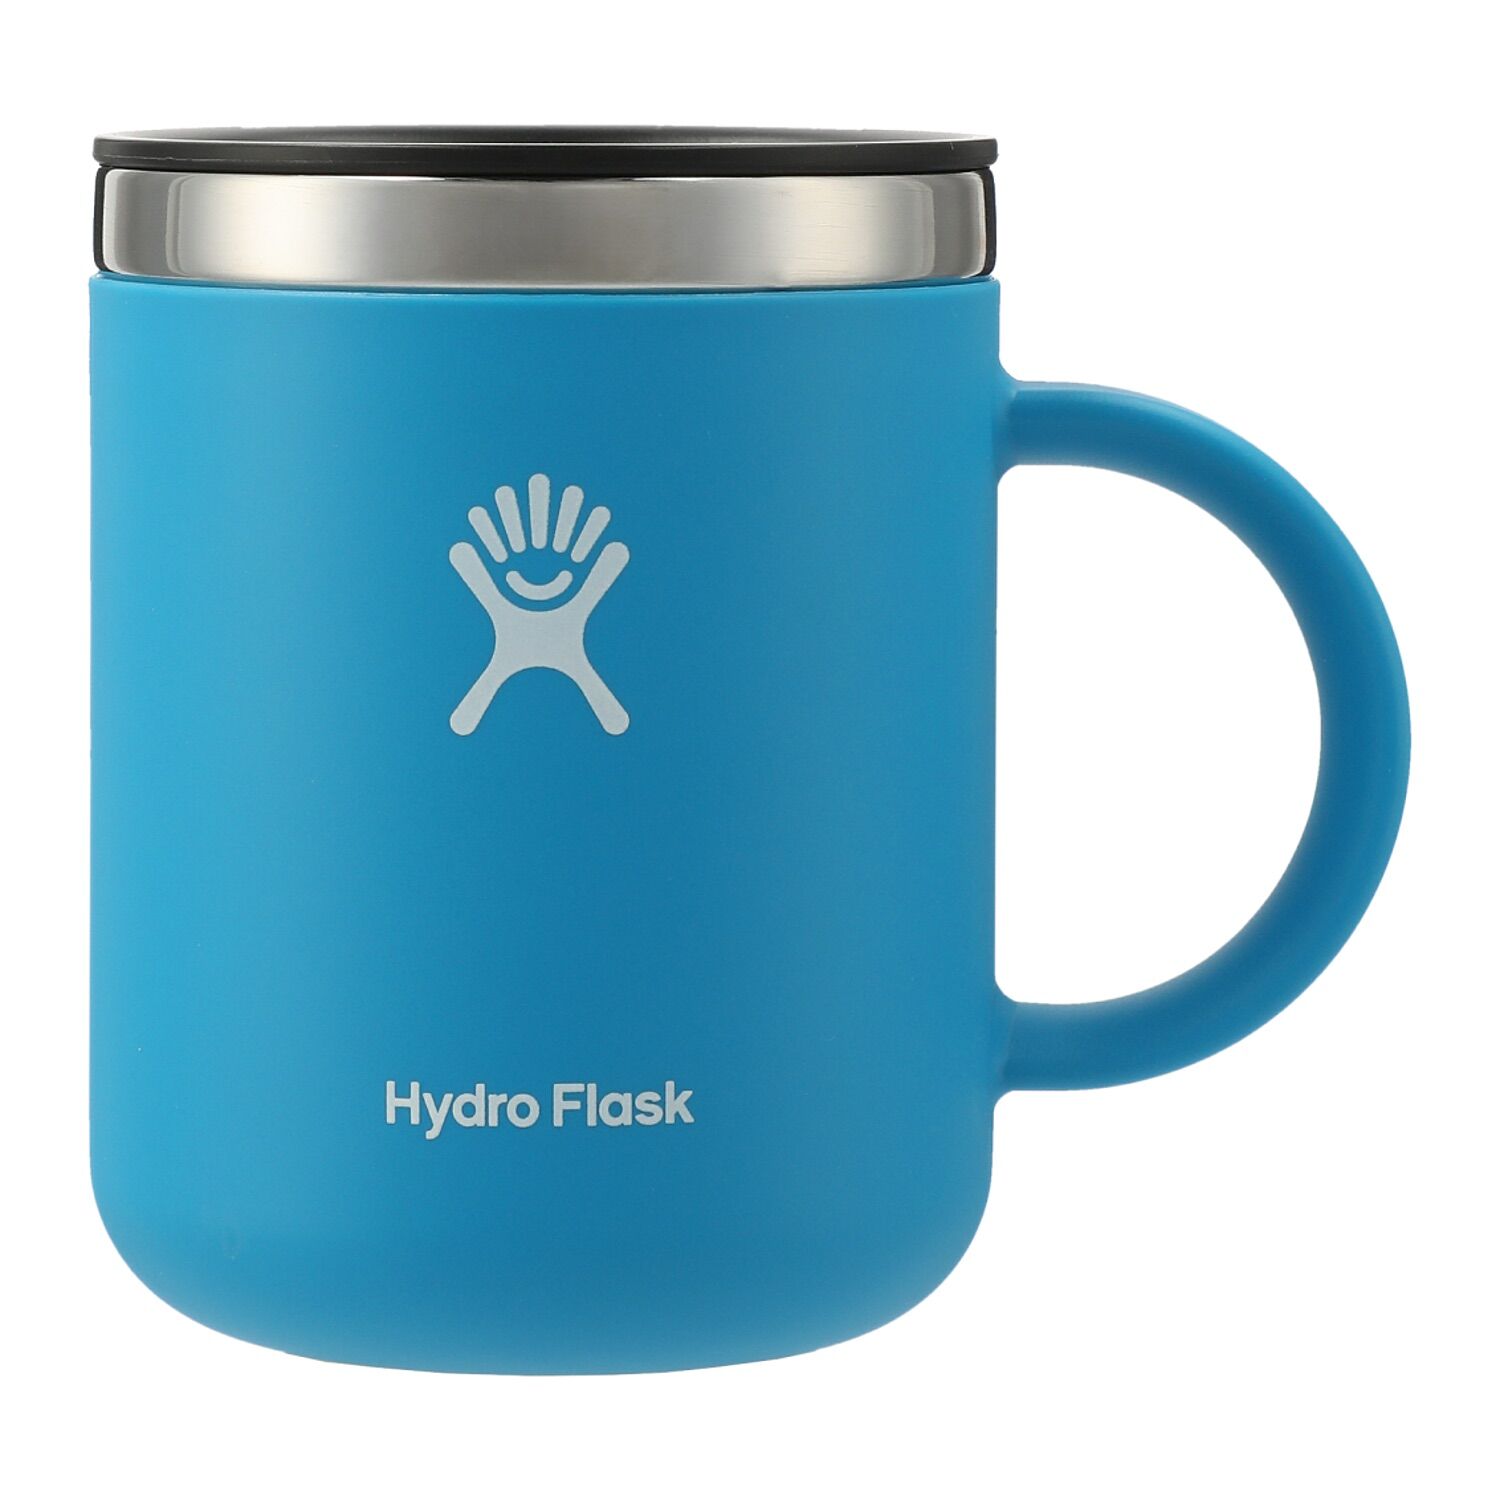 Hydro Flask Black Coffee Mug 12oz.